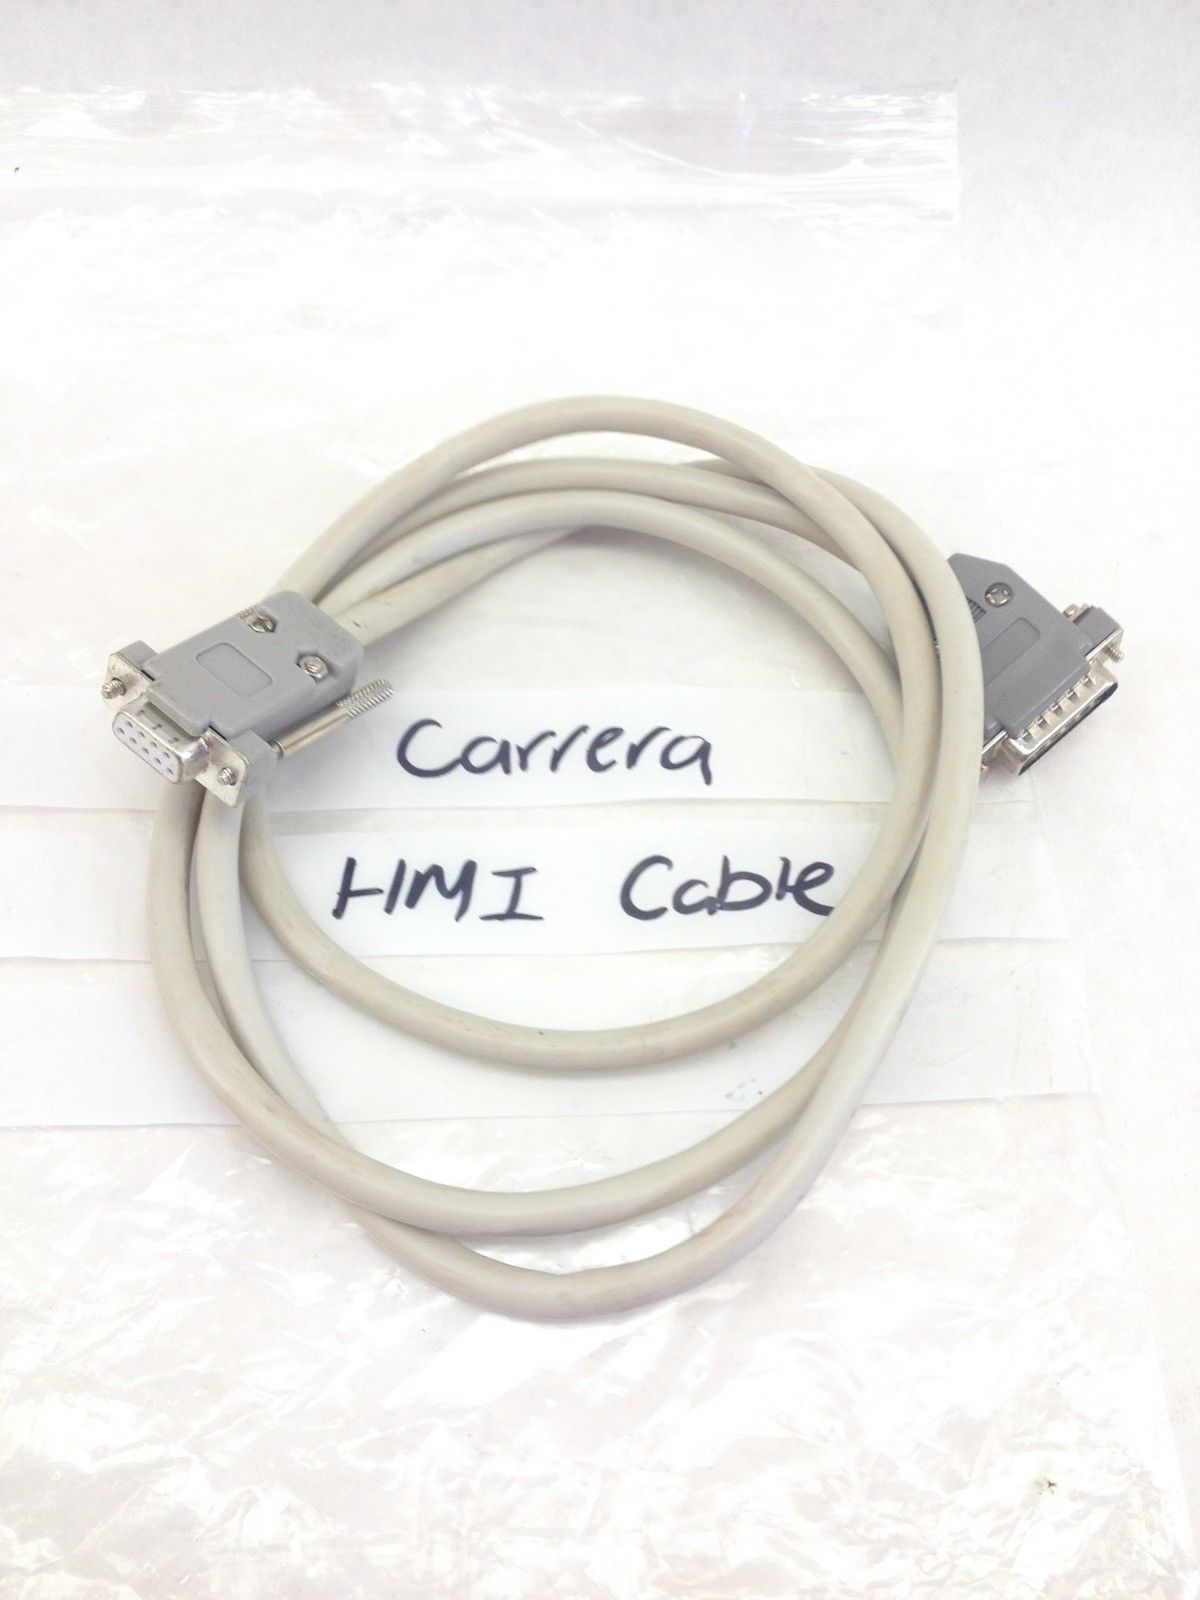 IMC CARRERA HMI CABLE FR20H2R 6X0.50 CEI 20-22 II 20050195 G2.C01